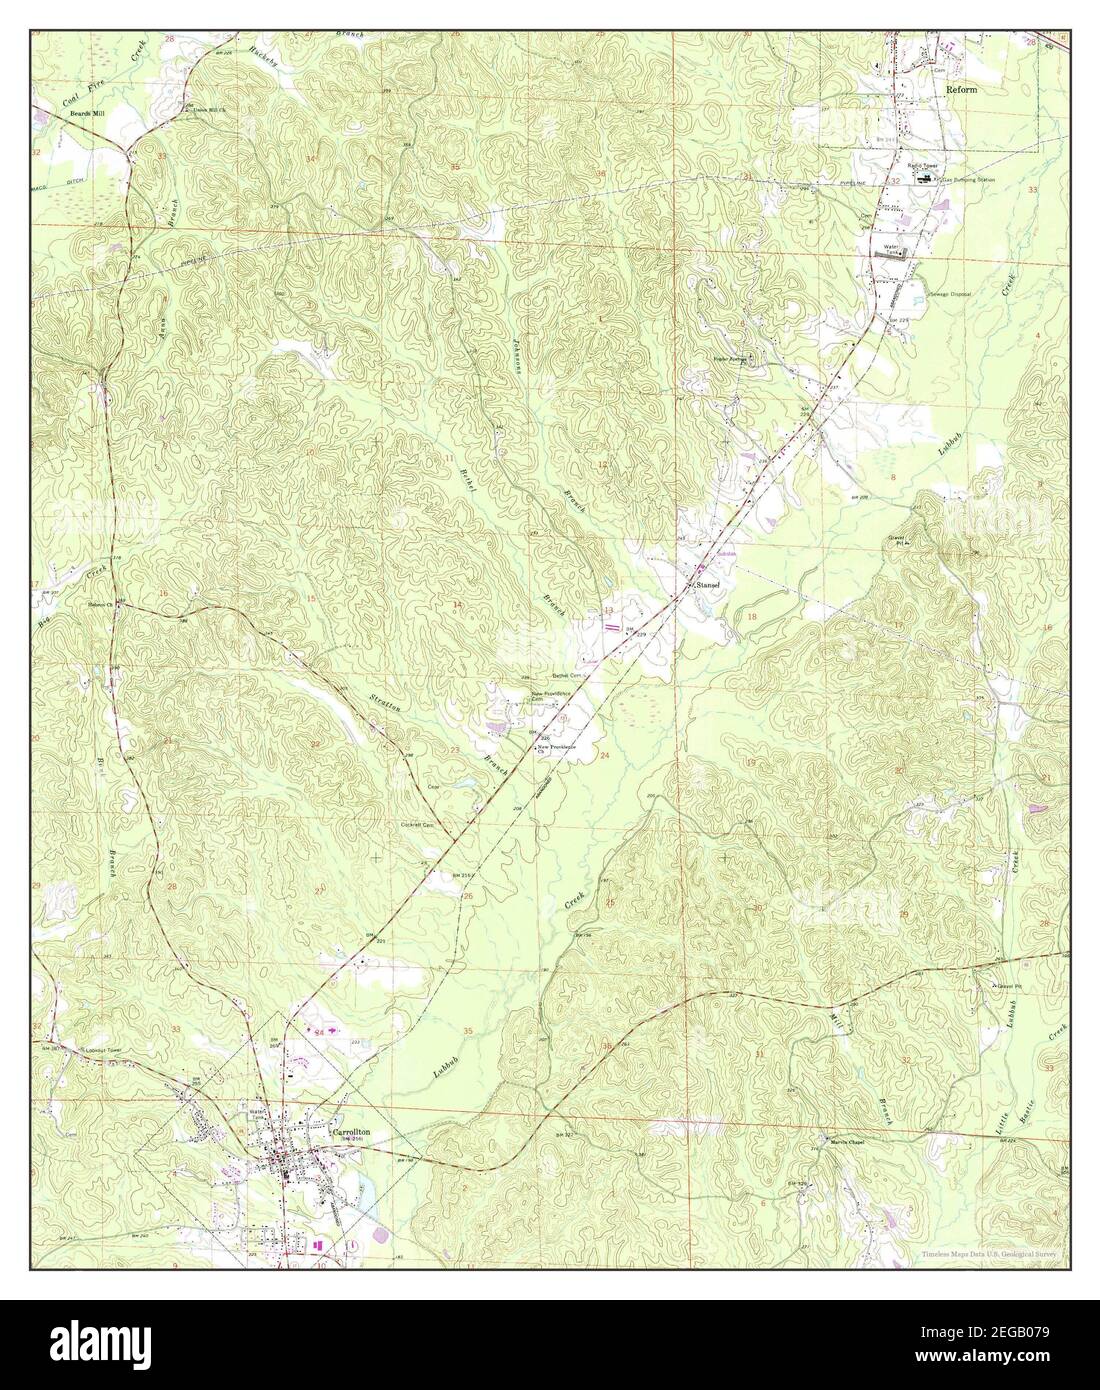 Carrollton, Alabama, map 1967, 1:24000, United States of America by Timeless Maps, data U.S. Geological Survey Stock Photo